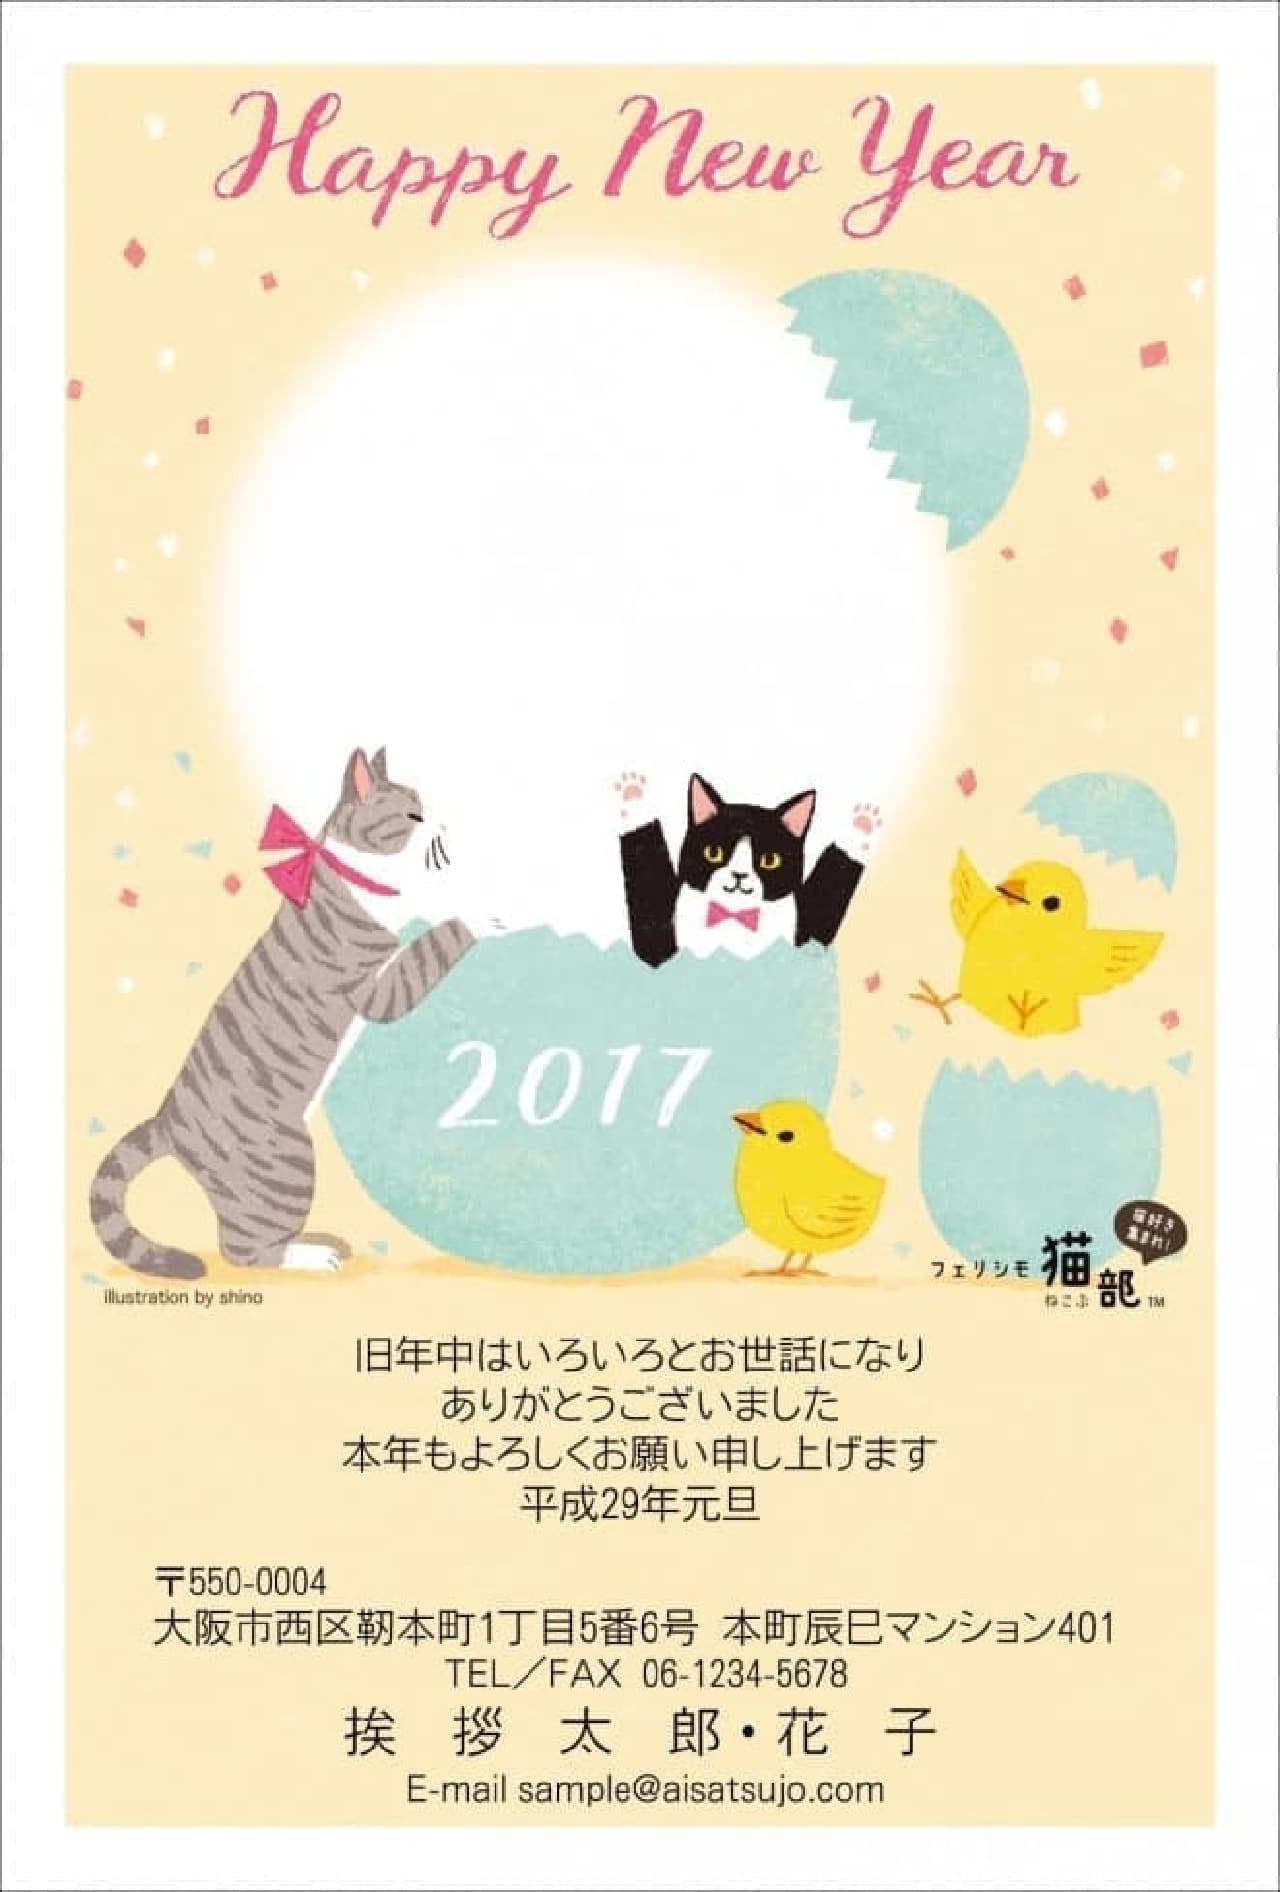 4 kinds of Felicimo cat club original designs in "Nyanga card"